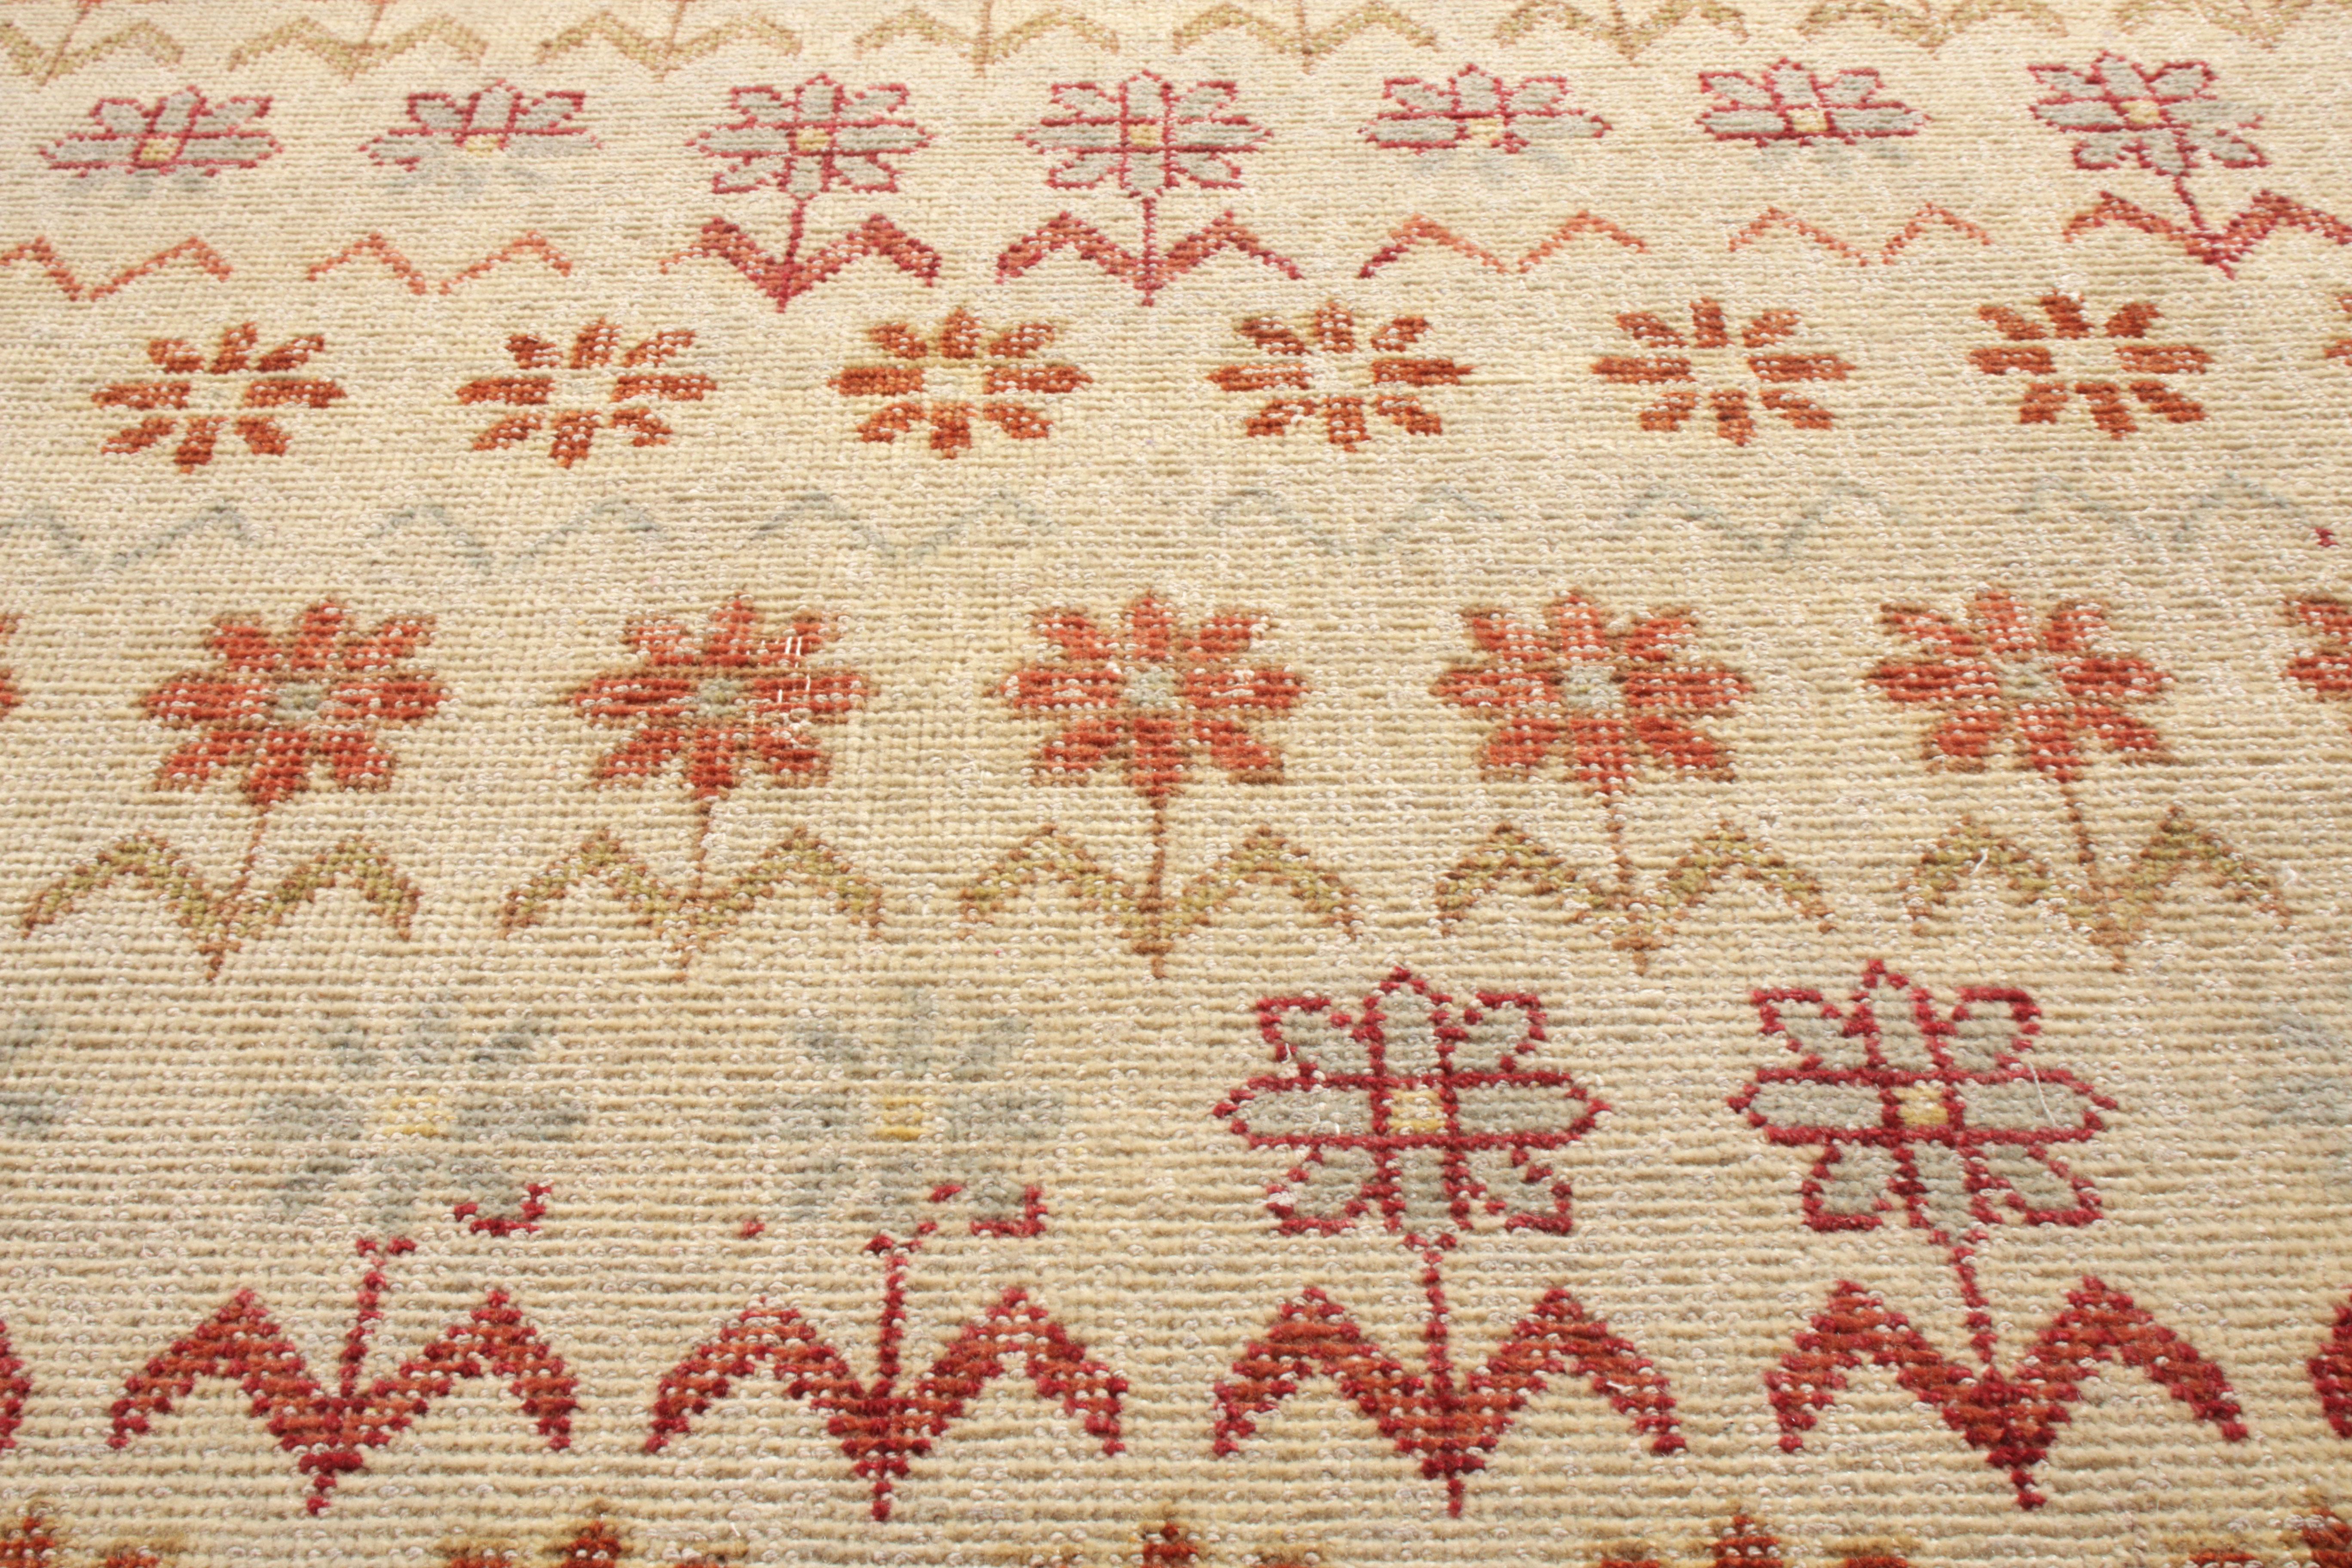 Indien Rug & Kilim's Distressed Style Rug in Beige-Brown and Red Floral Pattern (Tapis à motifs floraux beige, marron et rouge) en vente